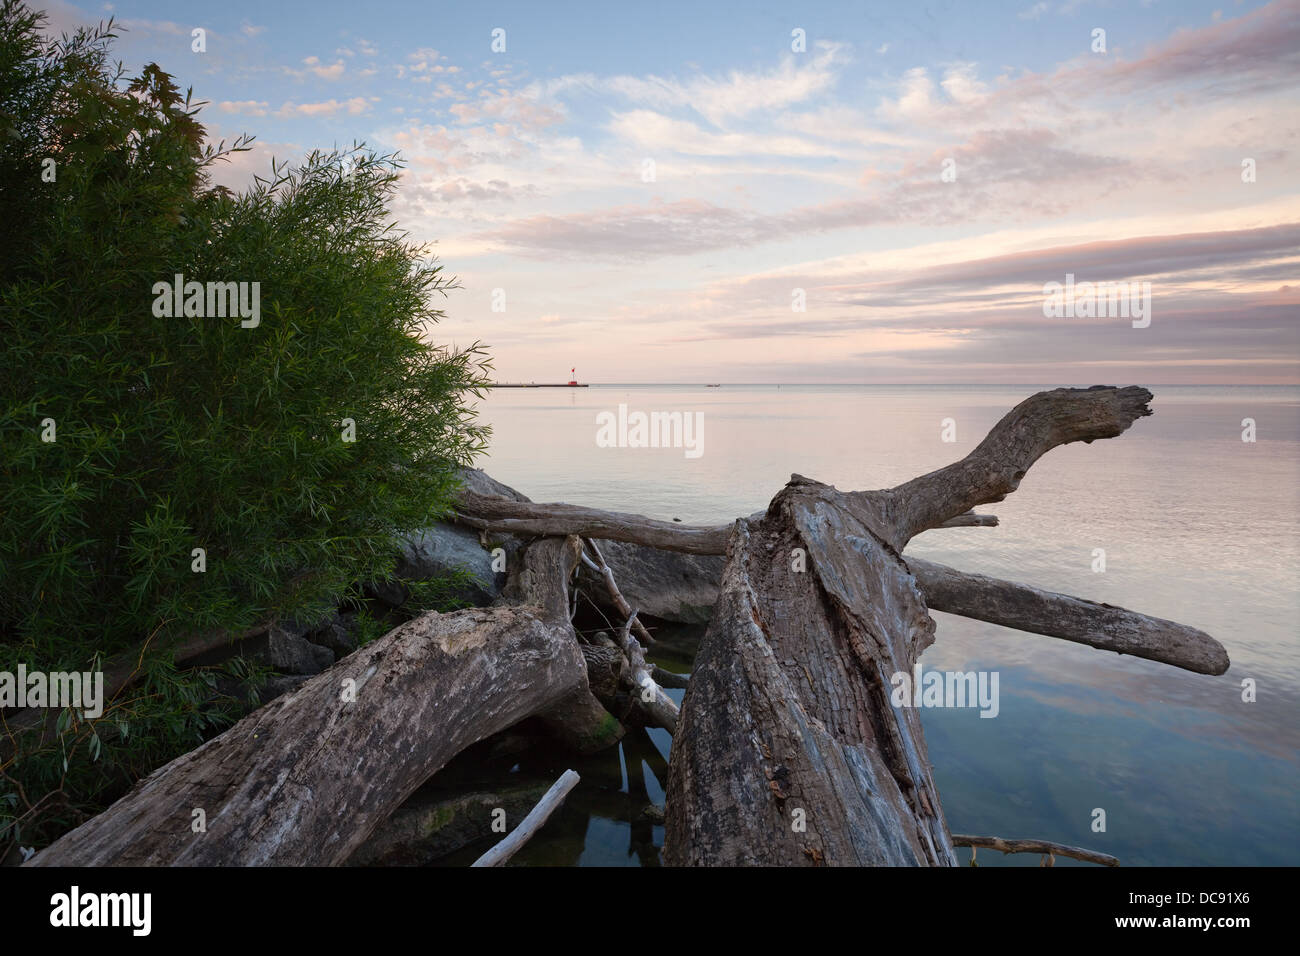 Peaceful scene on Lake Ontario, Oakville, Ontario, Canada. Stock Photo